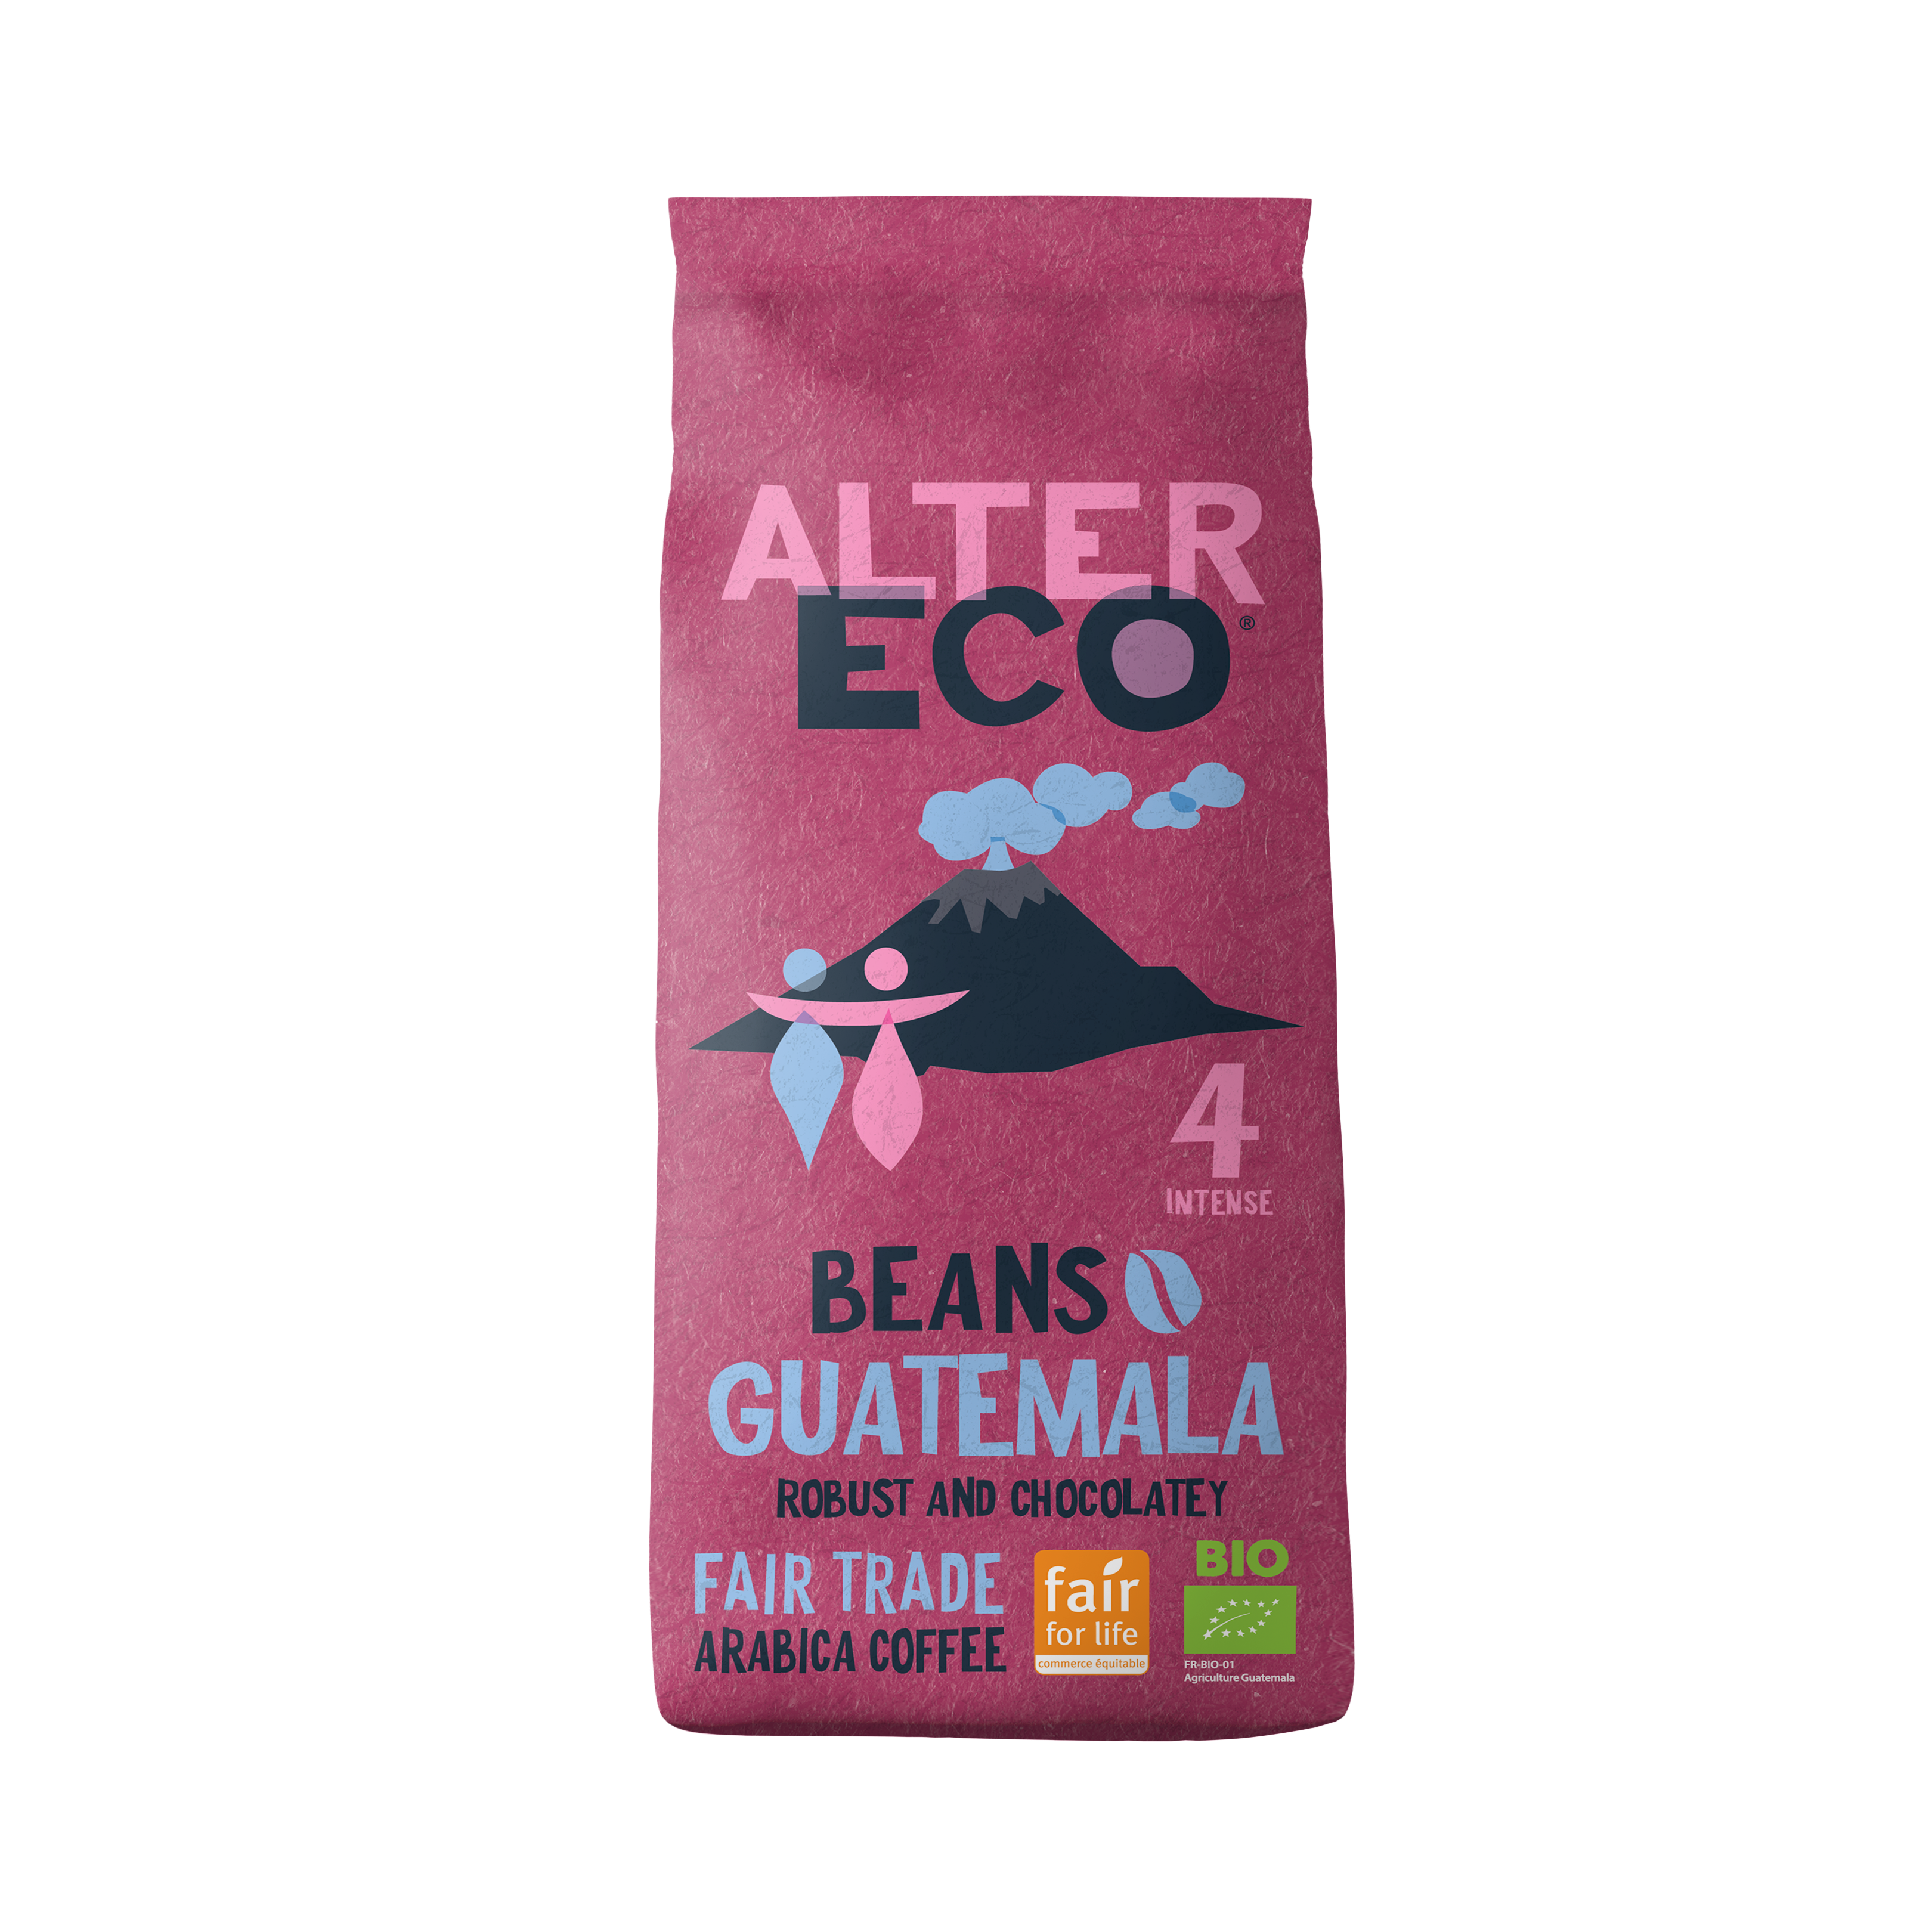 Alter Eco - Beans Guatamala - Front